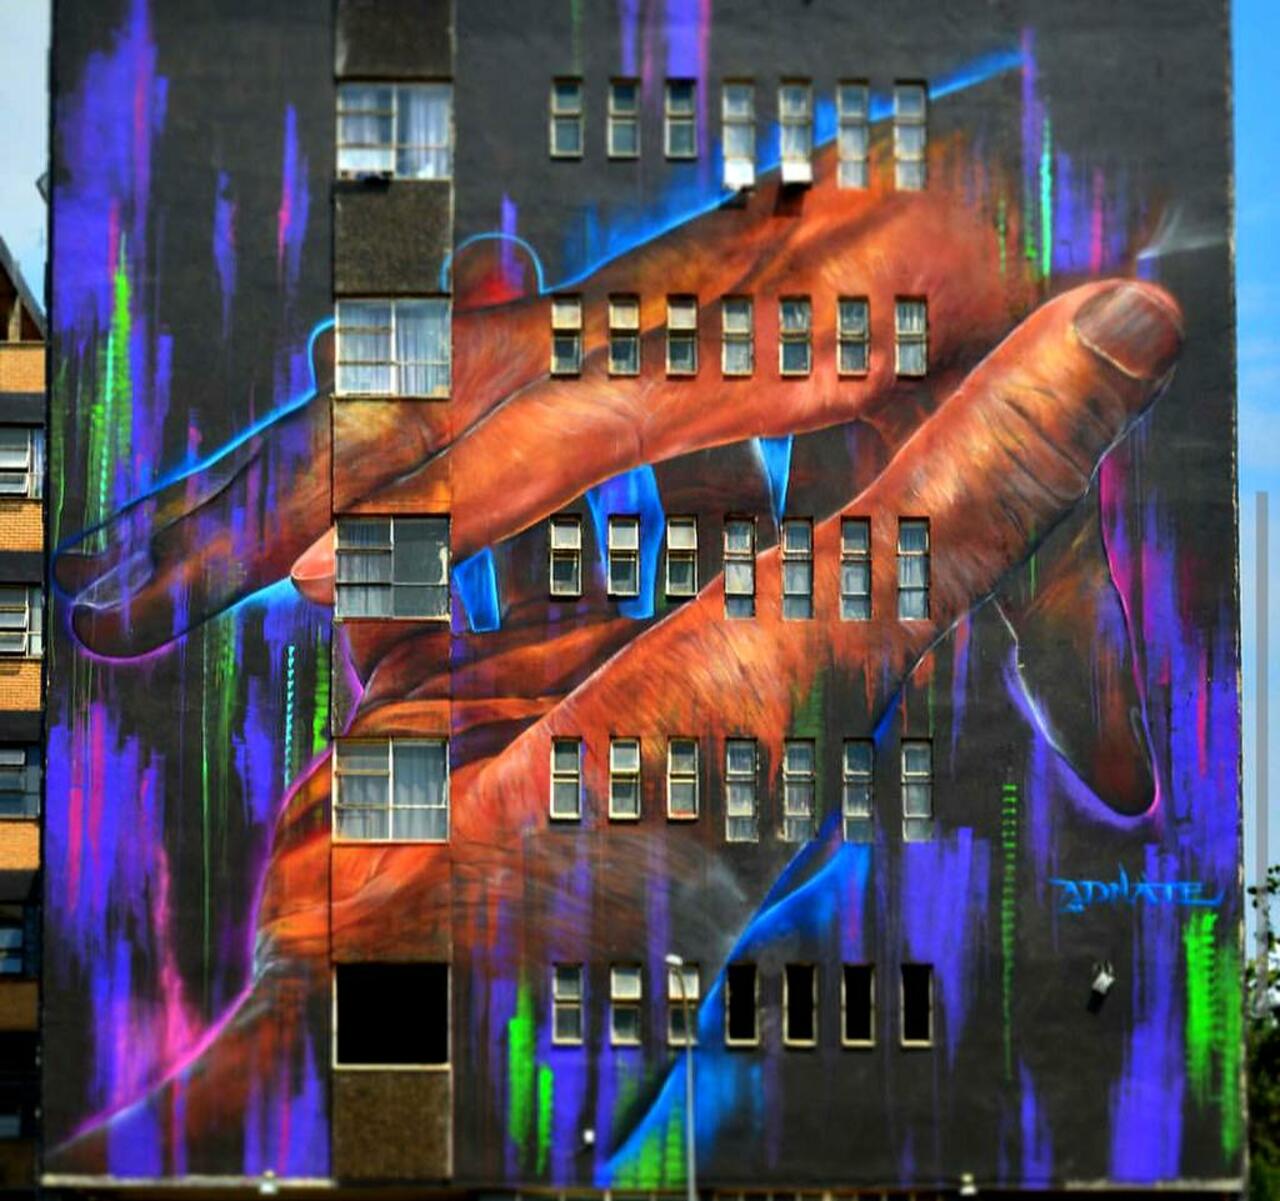 RT @Art4anyone: New mural by #adnate in #Johannesburg  #SouthAfrica for #cityofgoldfestival #streetart #art #contemporaryart https://t.co/YHC2PAtVMz